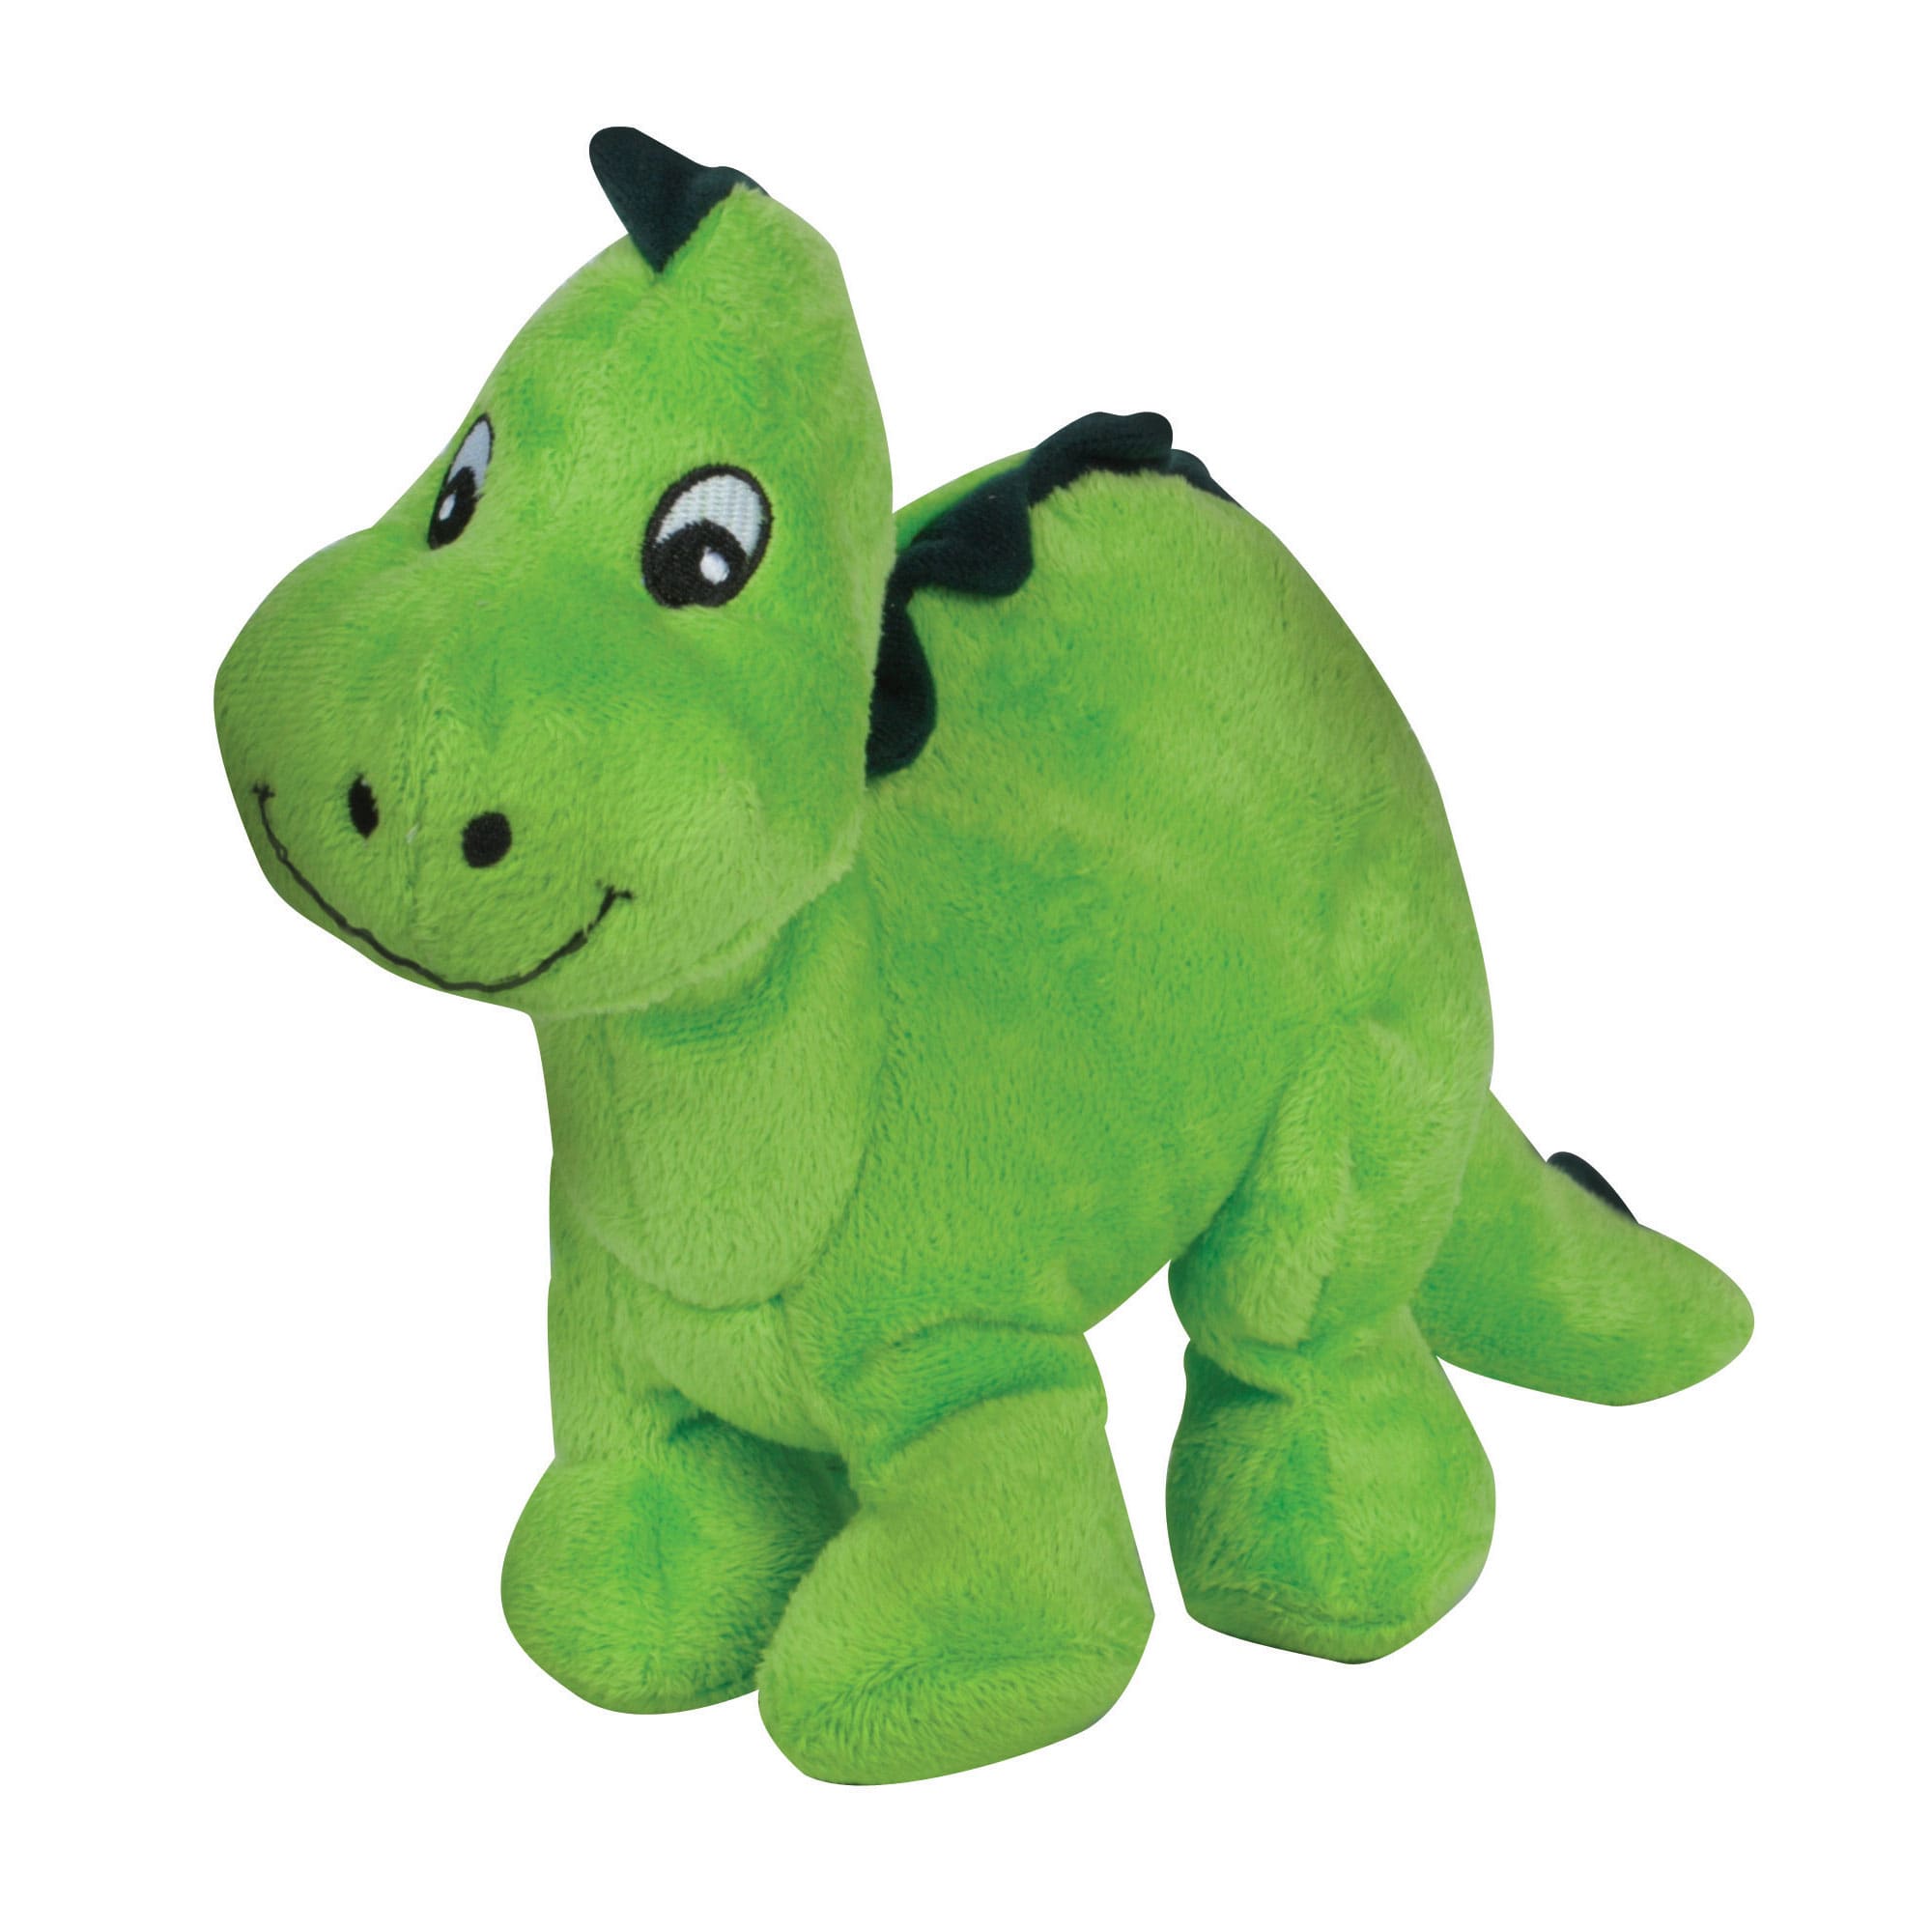 big green dinosaur toy